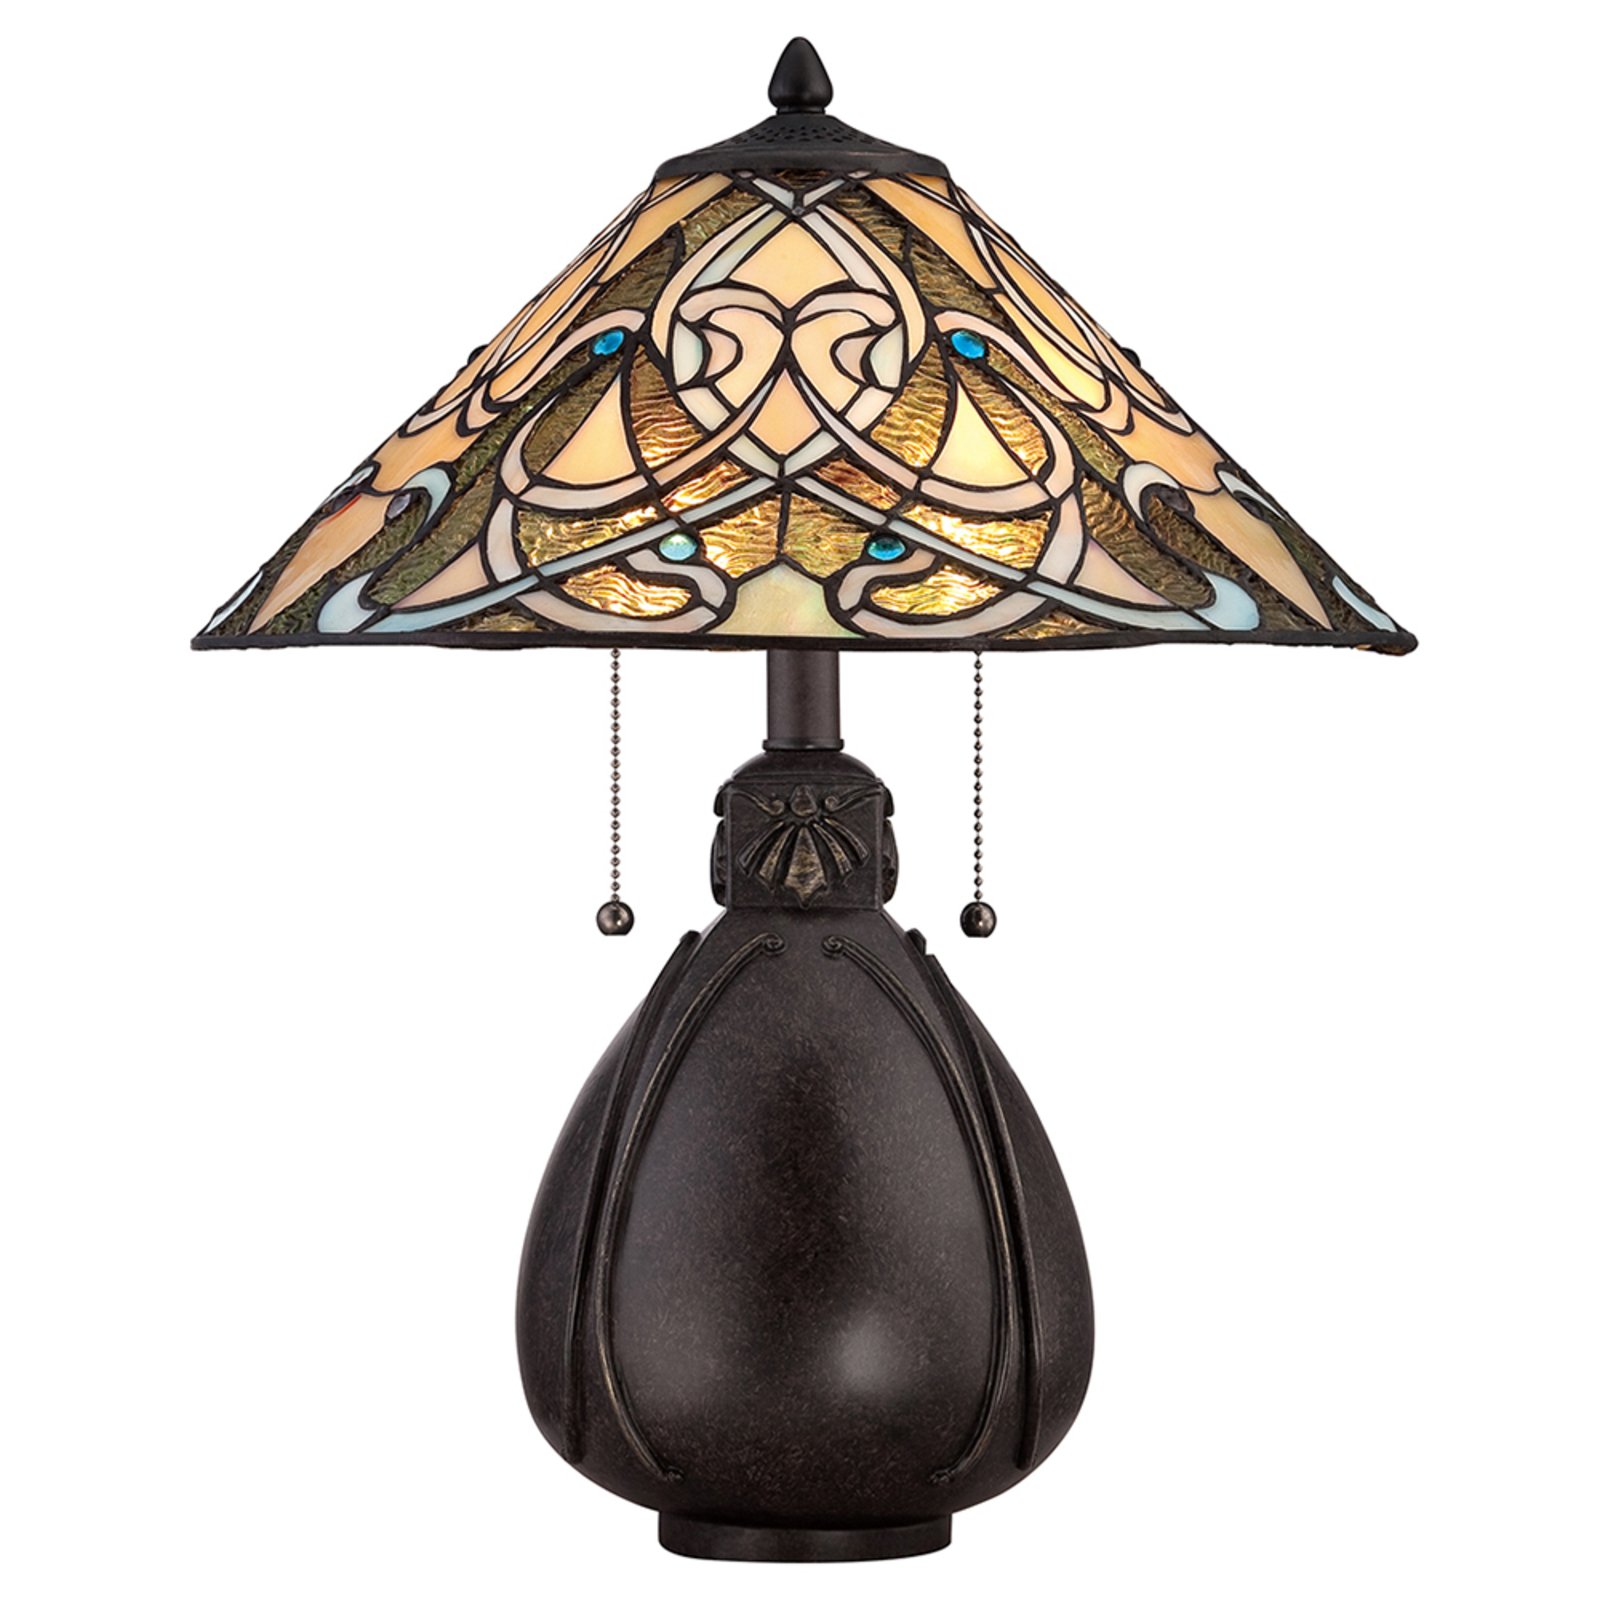 India stolna lampa u Tiffany dizajnu